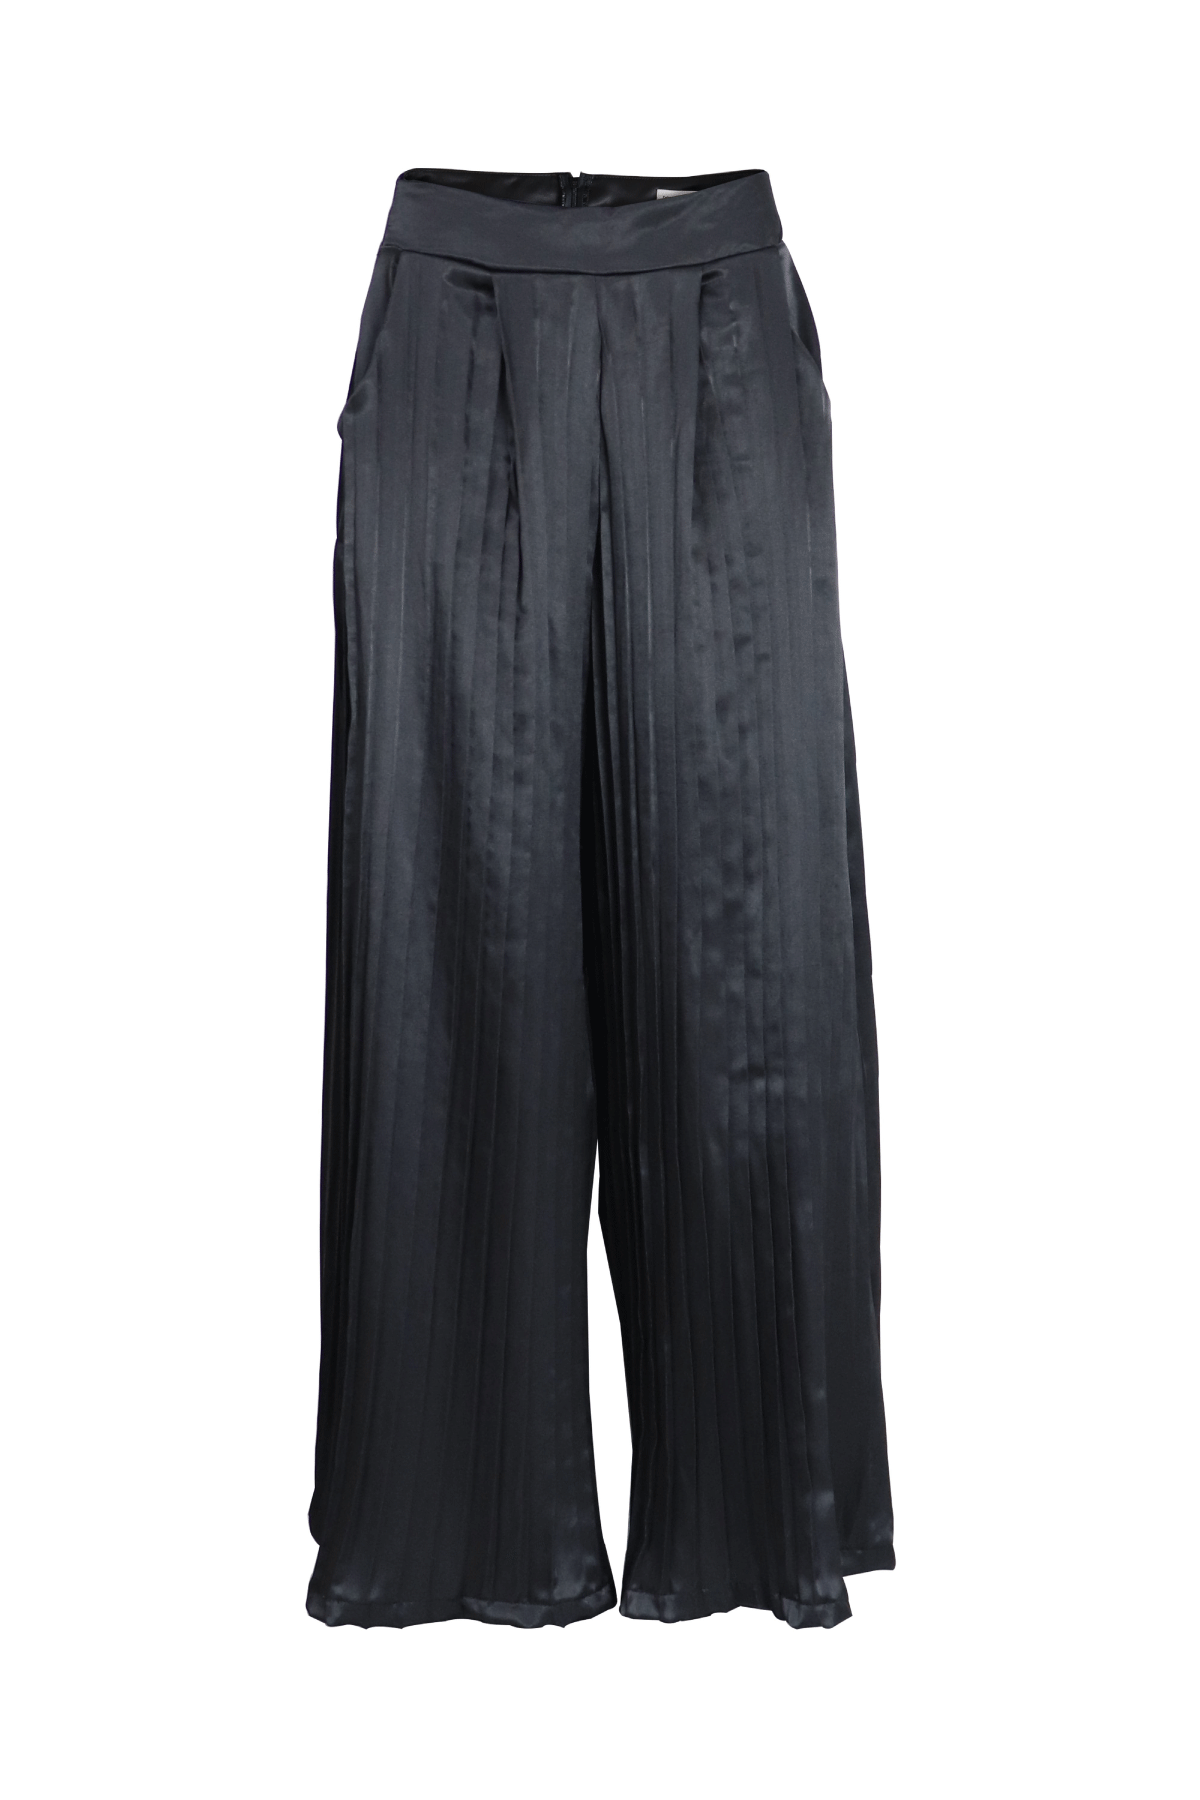 Pantalón trillado en negro con pretina ancha.